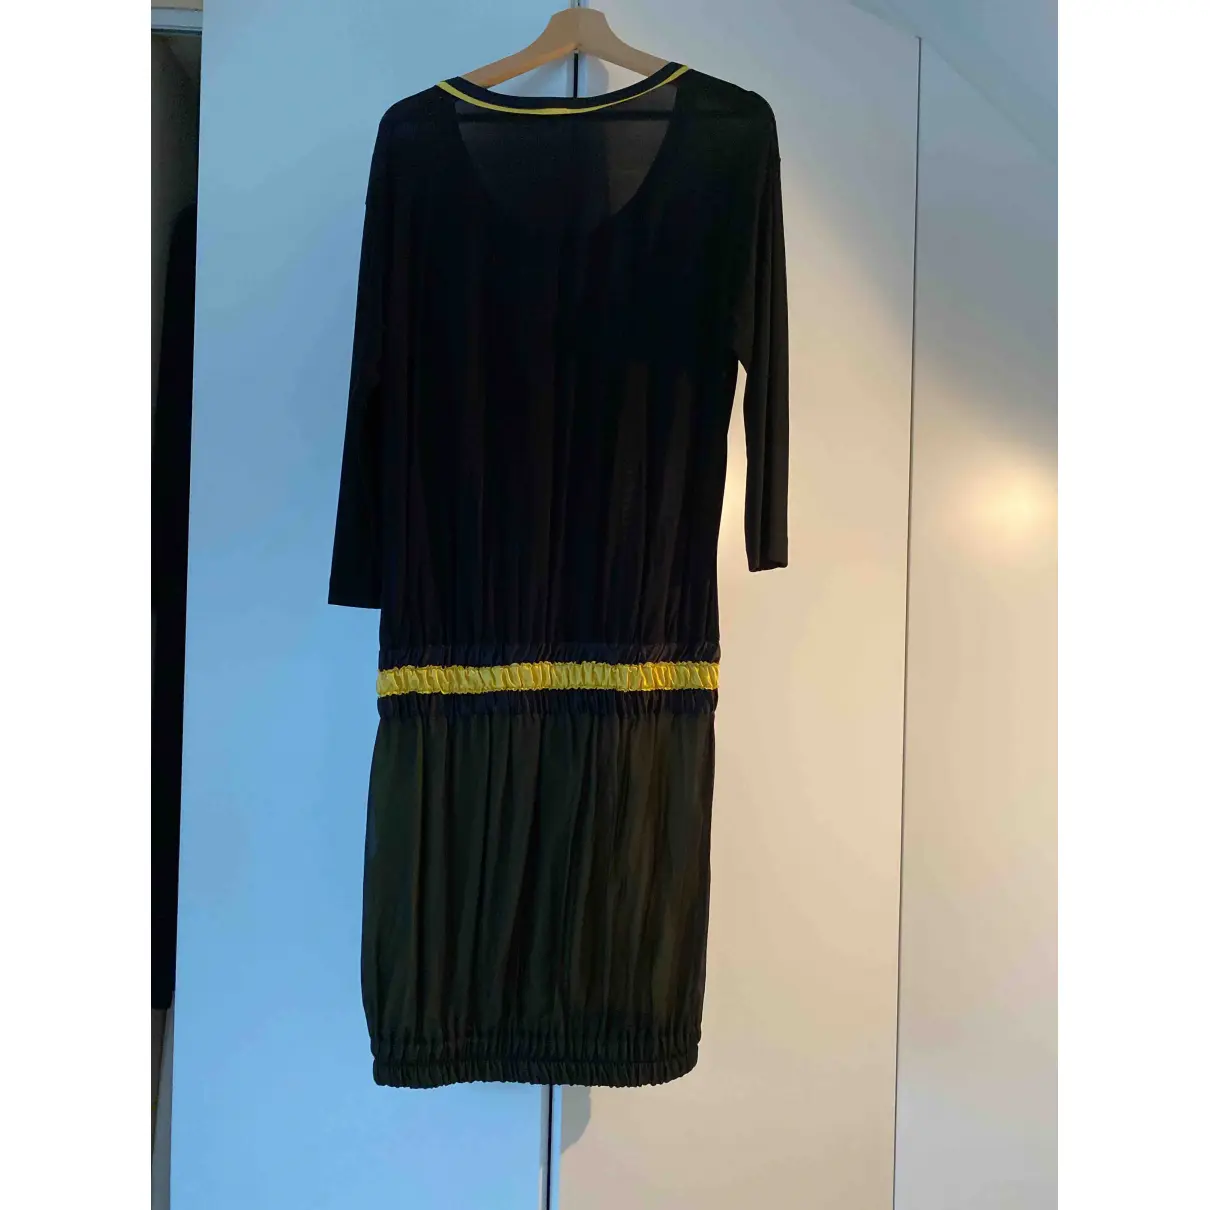 Buy Gianfranco Ferré Mid-length dress online